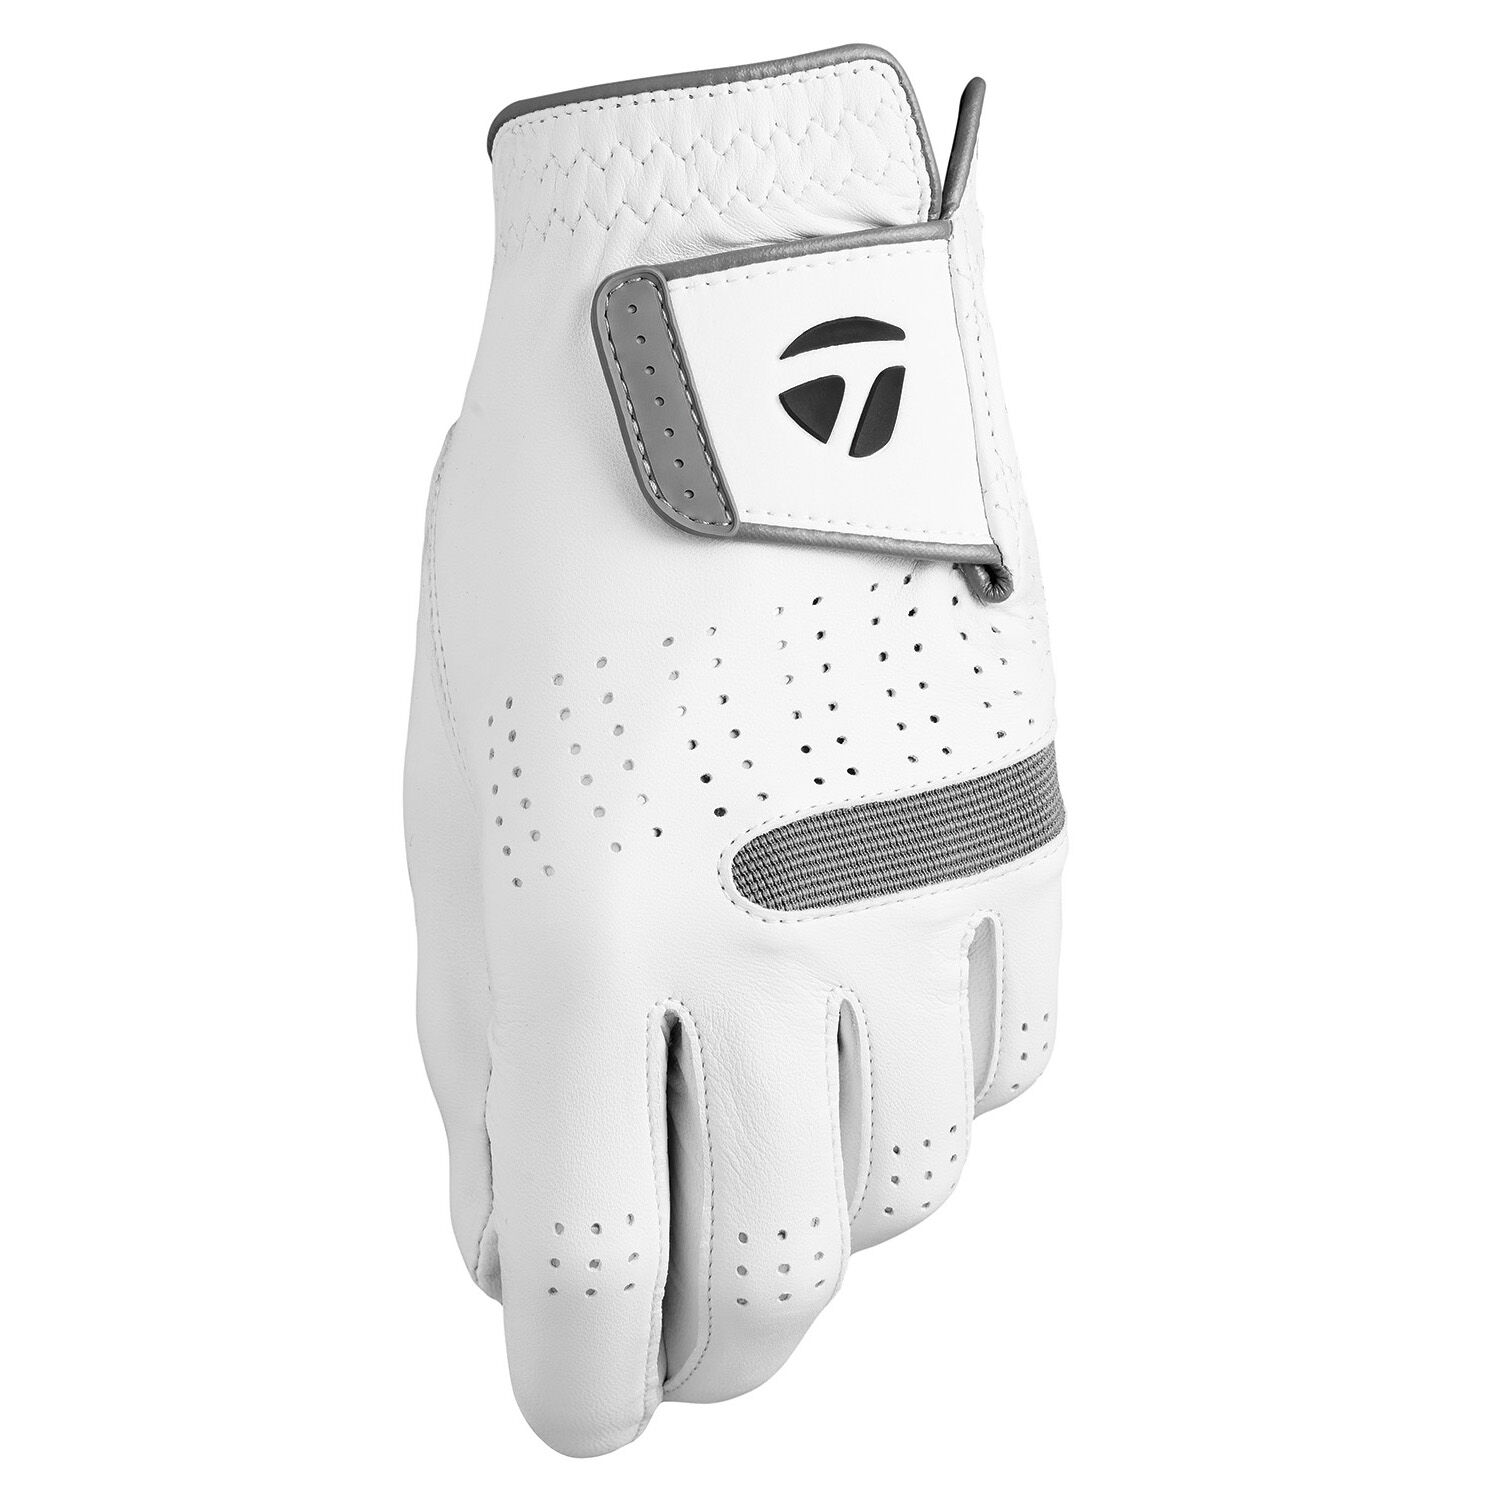 Taylormade Golf Glove Size Chart